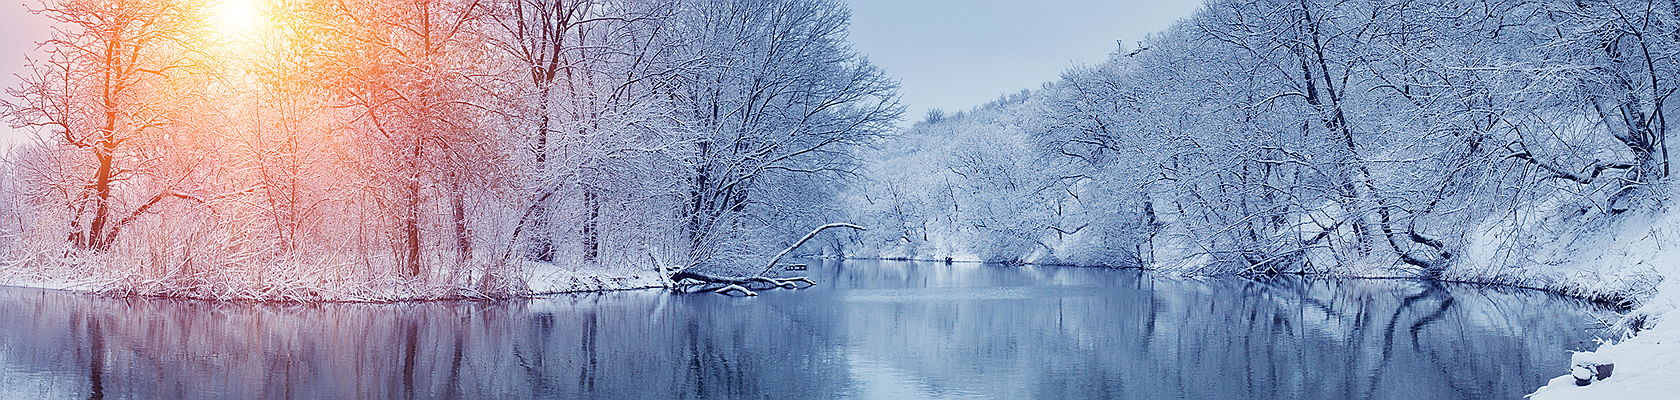  Varese
- lago-di-varese-inverno.jpg